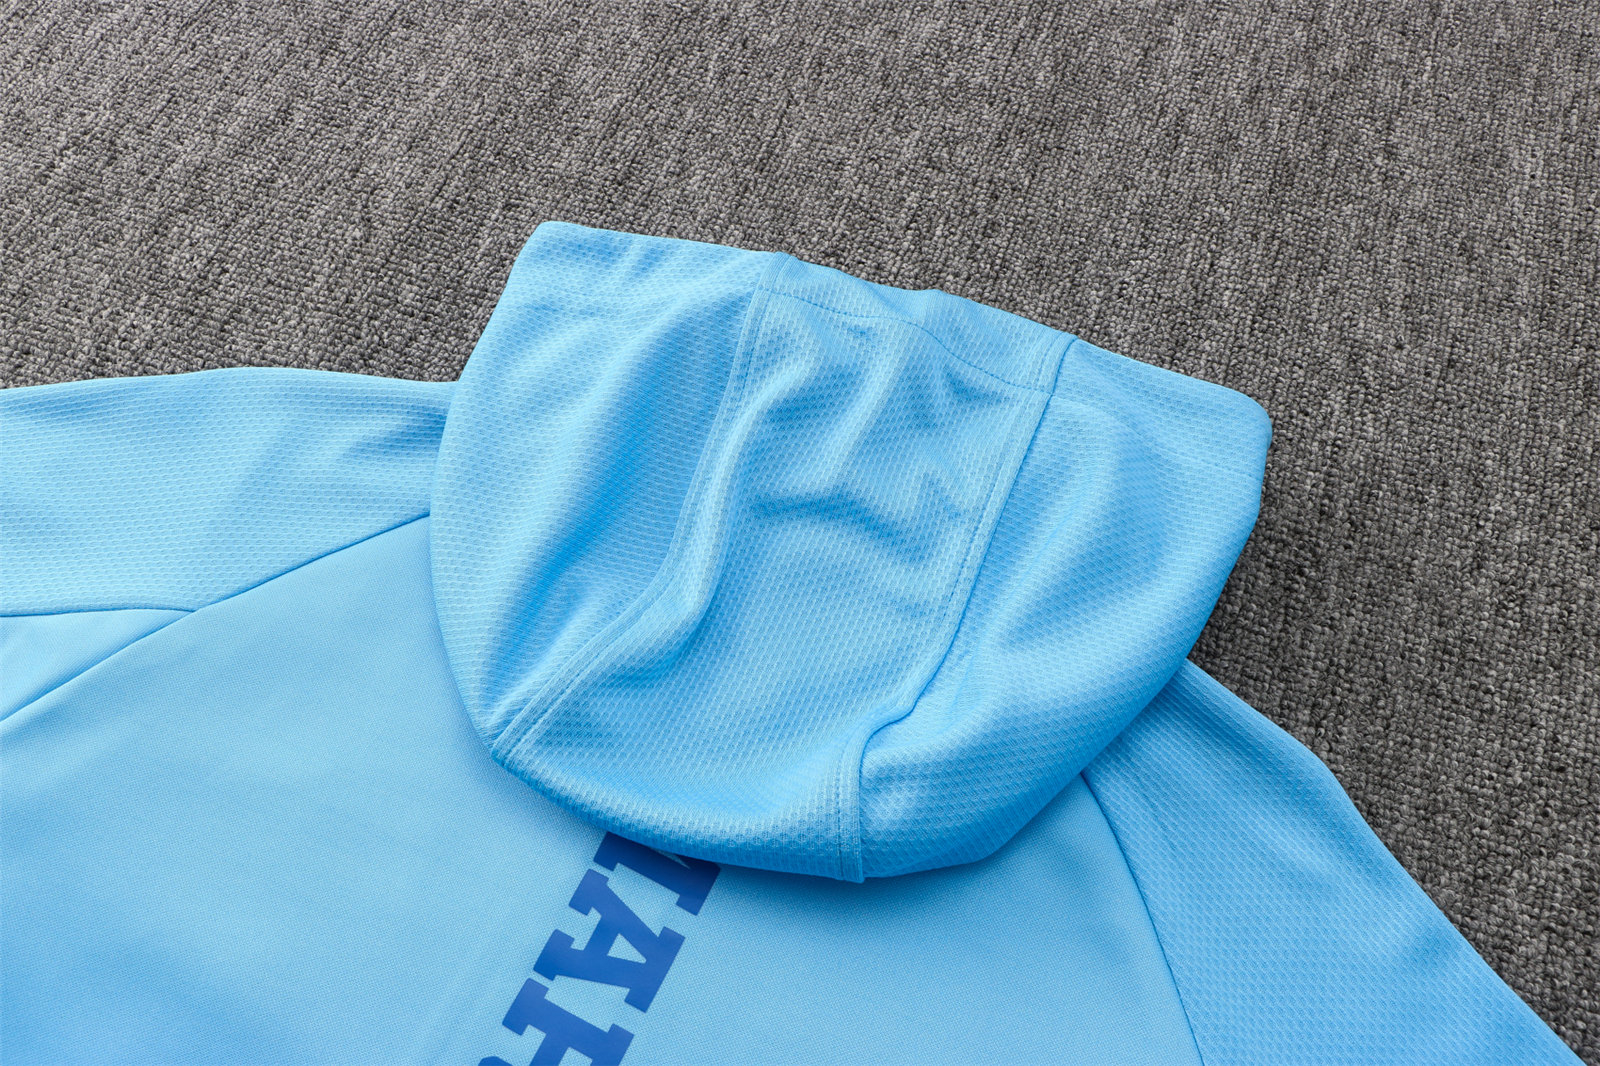 Olympique Marseille Soccer Training Suit Jacket + Pants Hoodie Blue Mens 2021/22